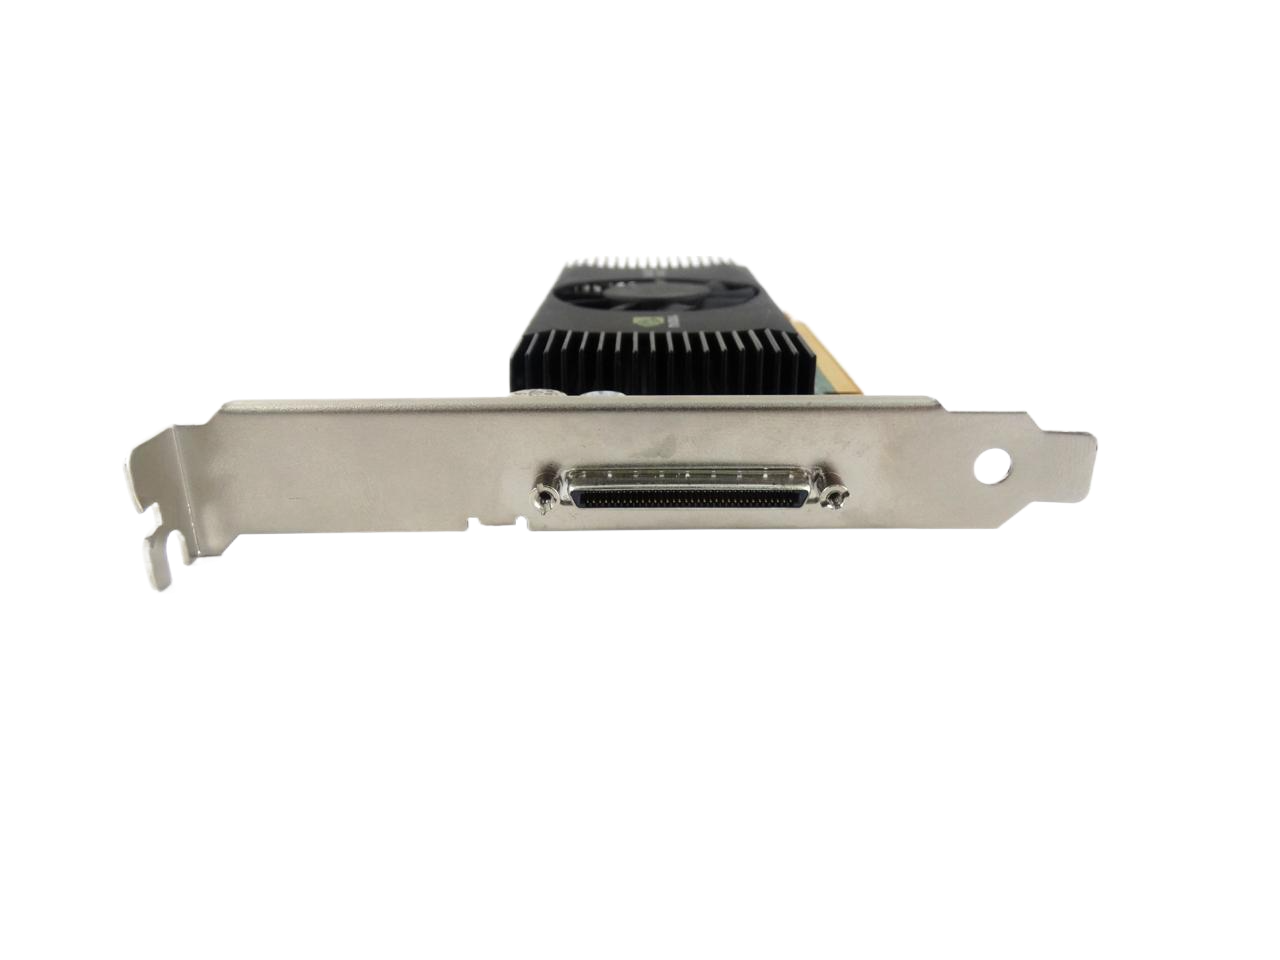 PNY Quadro NVS 420 512MB 128-bit GDDR3 PCI Express x16 Low Profile Ready Workstation Video Card VCQ420NVS-X16-PB (Refurbished)